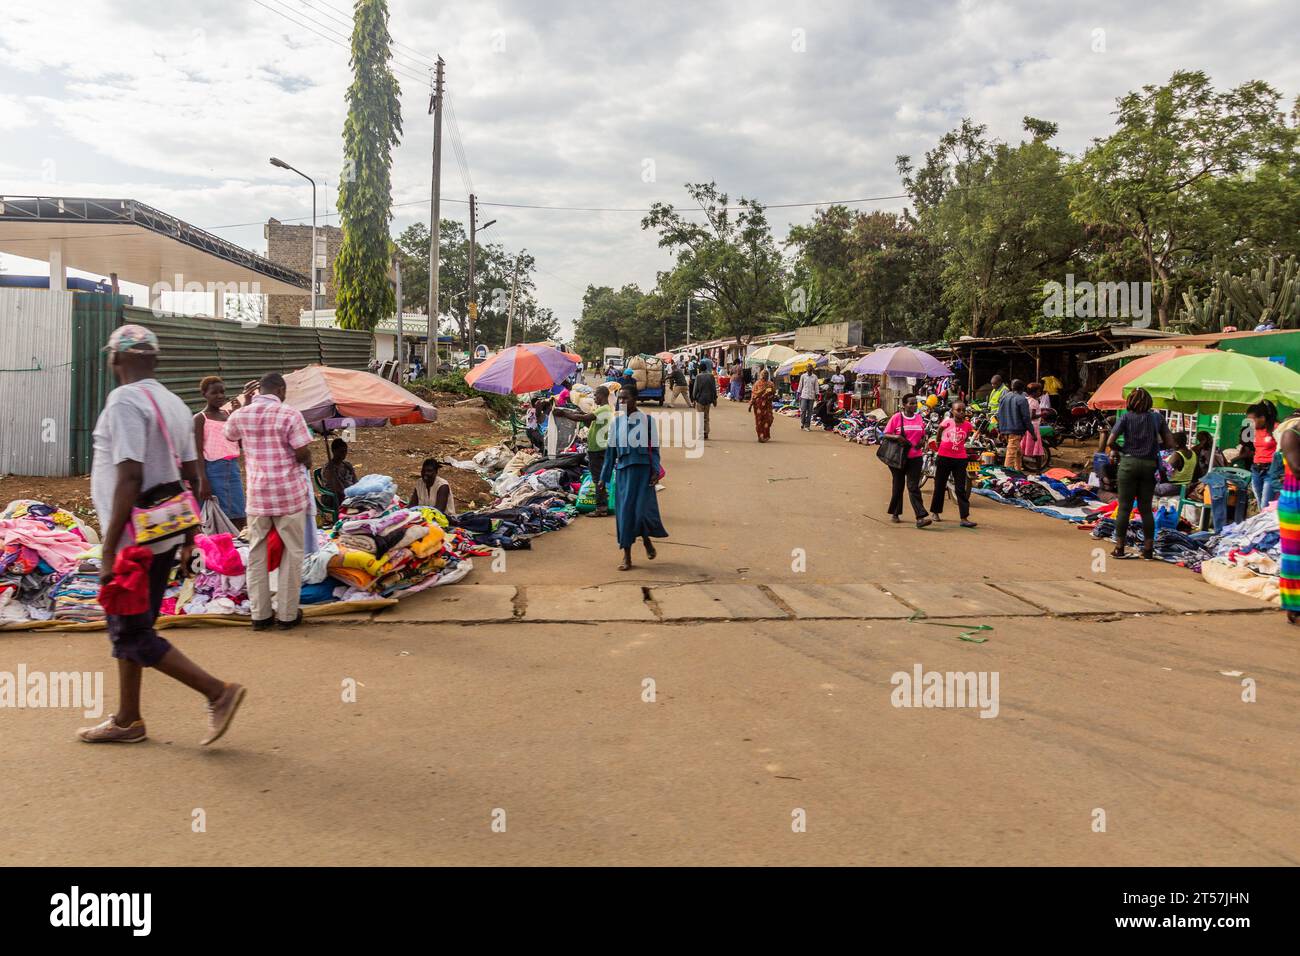 KISUMU, KENYA - FEBRUARY 22, 2020: View of a street market in Kisumu, Kenya Stock Photo